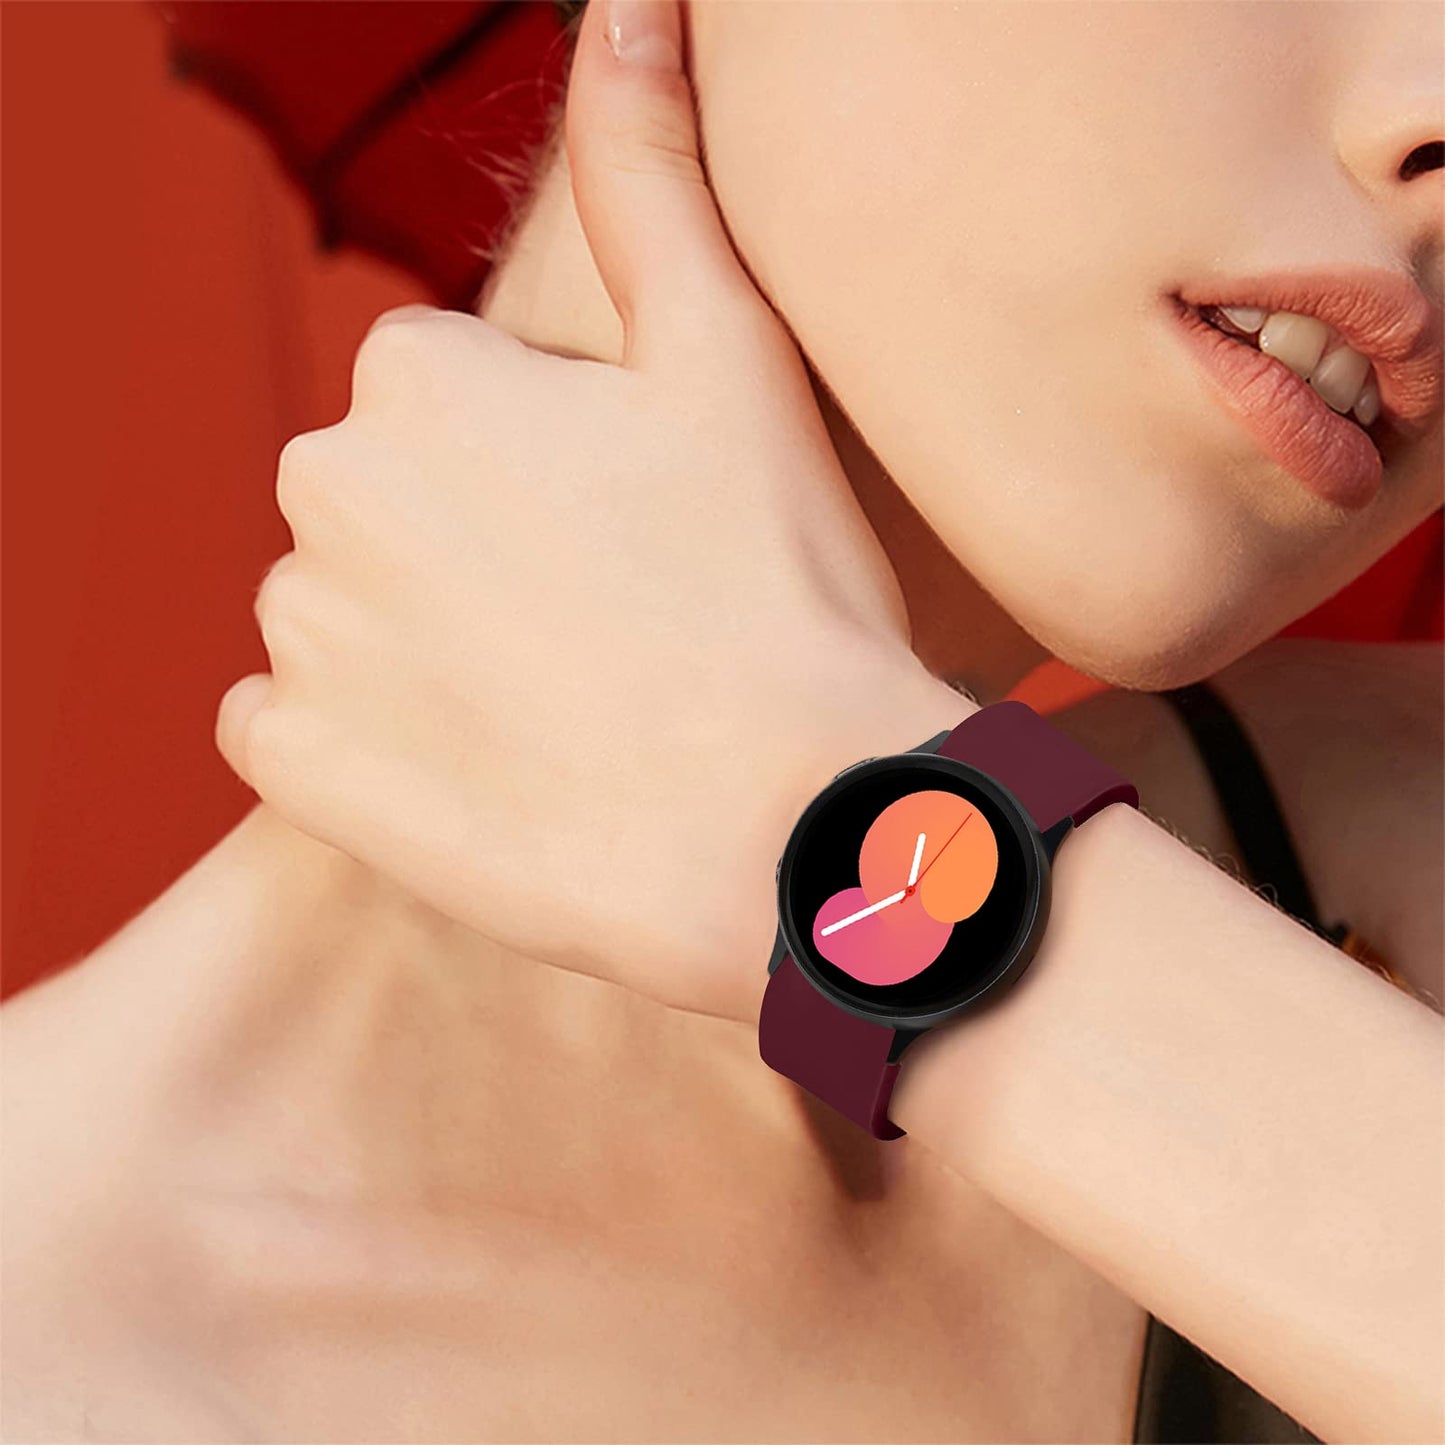 Strap For Samsung Galaxy Watch, Silicone Bracelet for Galaxy Watch